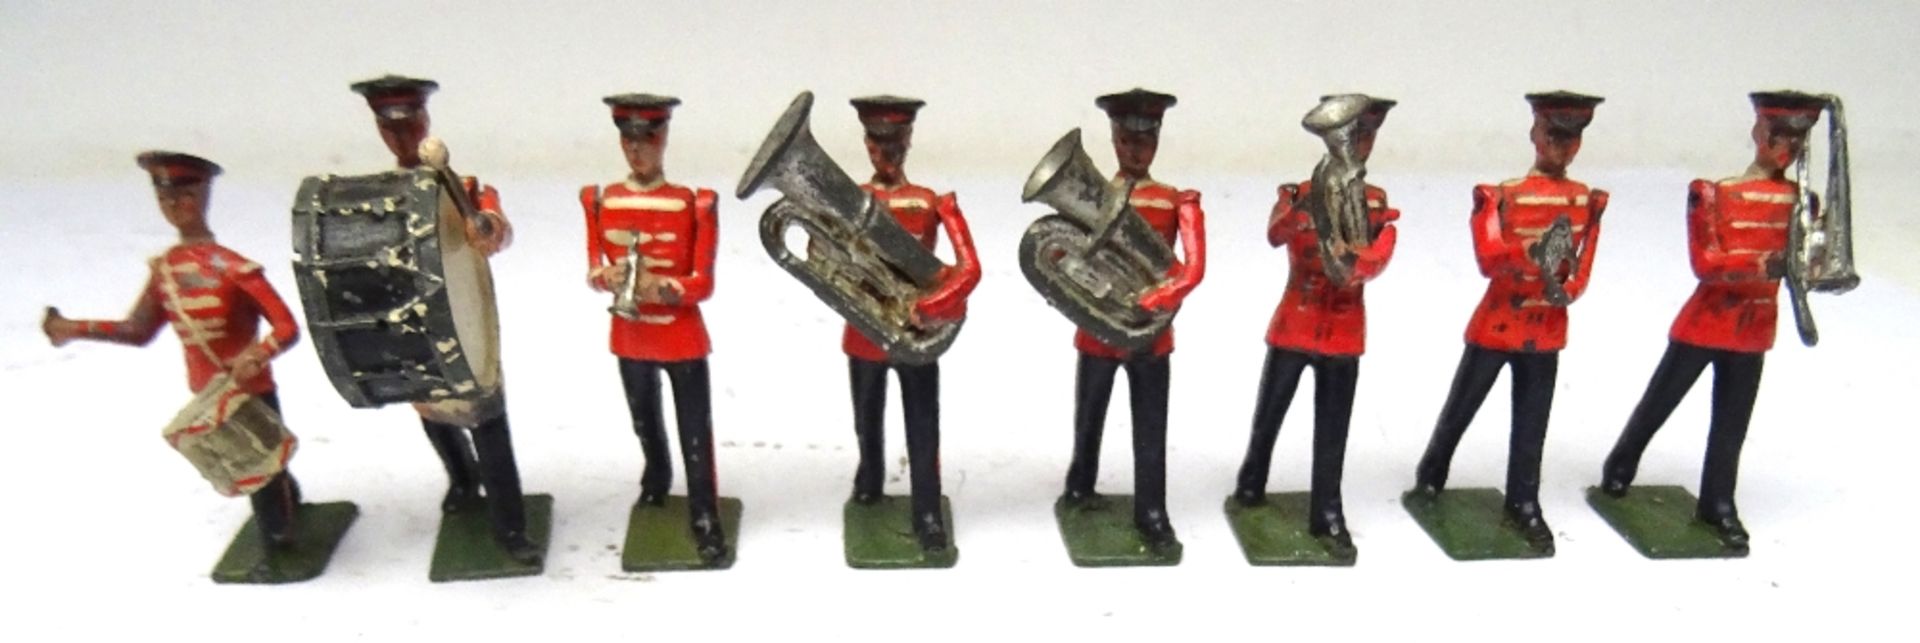 Britains Salvation Army silver Band, red coats - Bild 5 aus 12